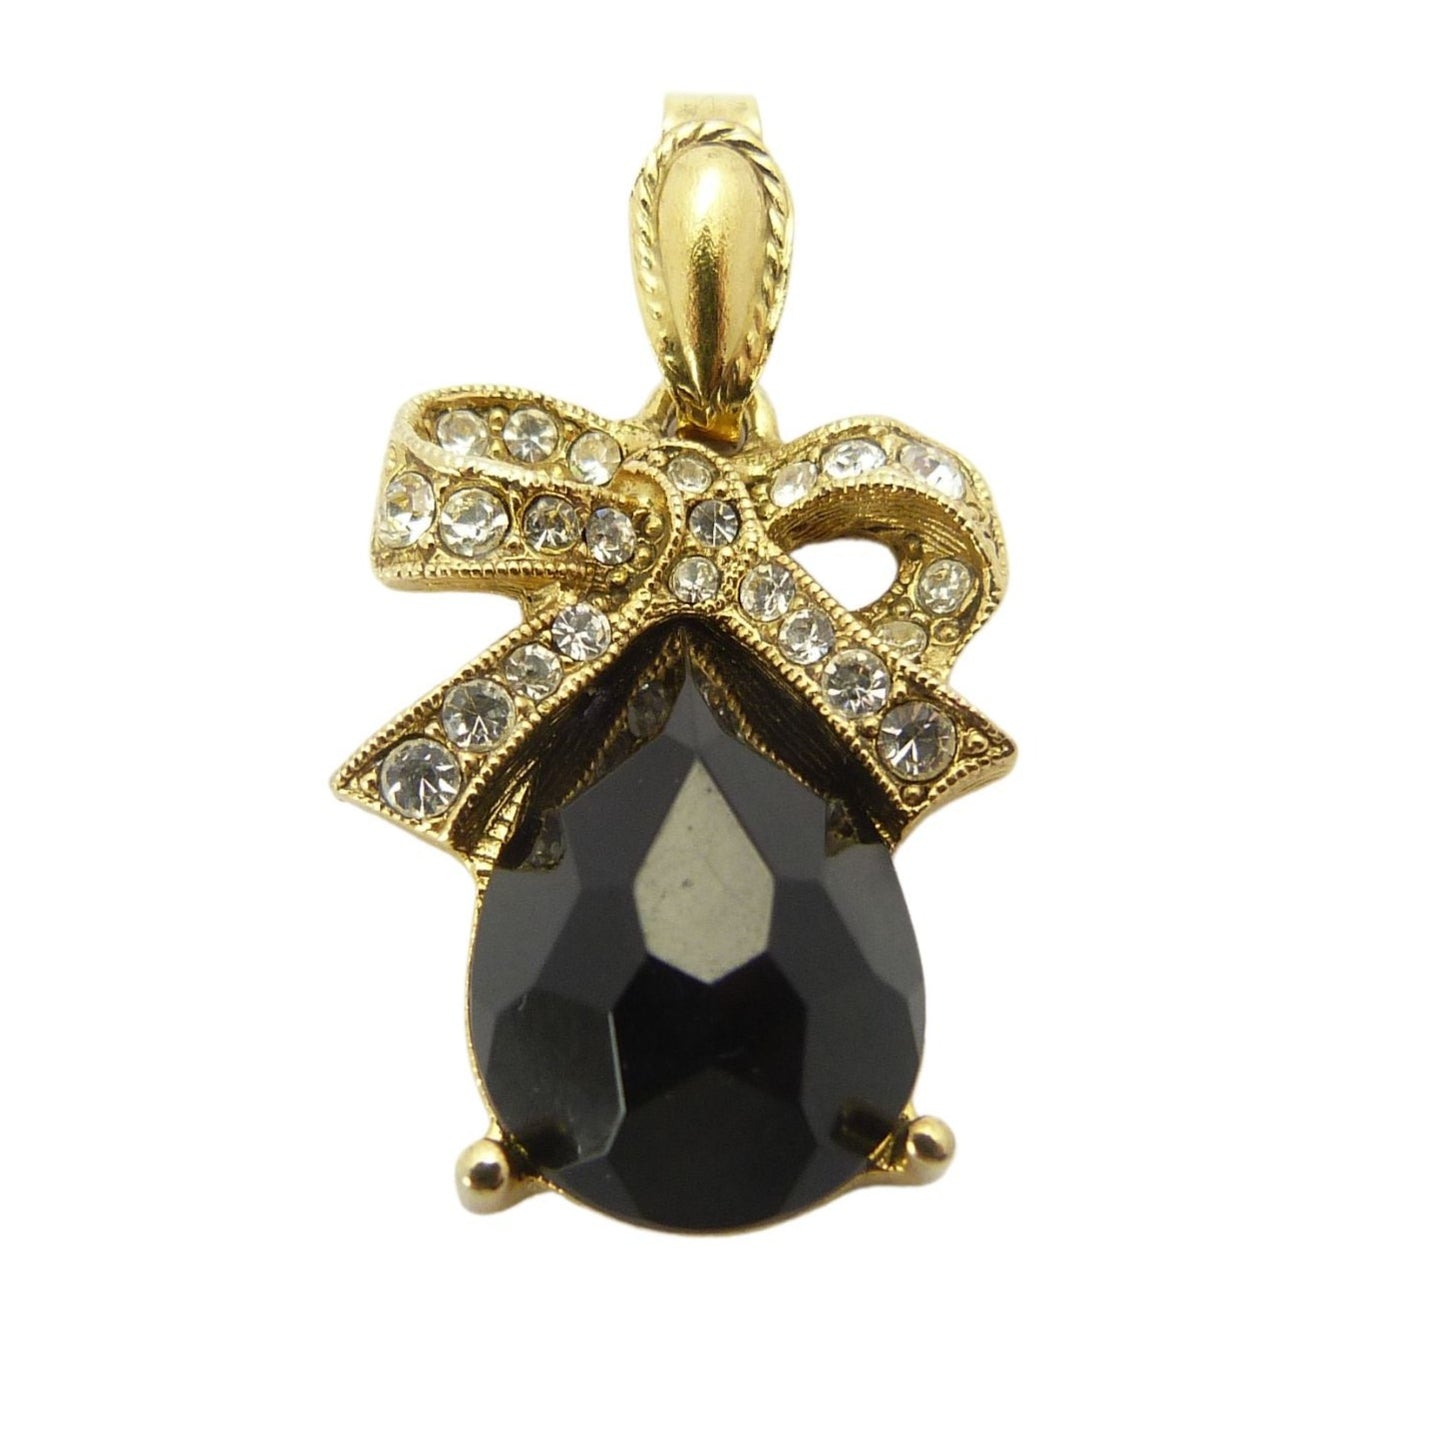 Vintage Gold & Black Stone Teardrop Bow Pendant